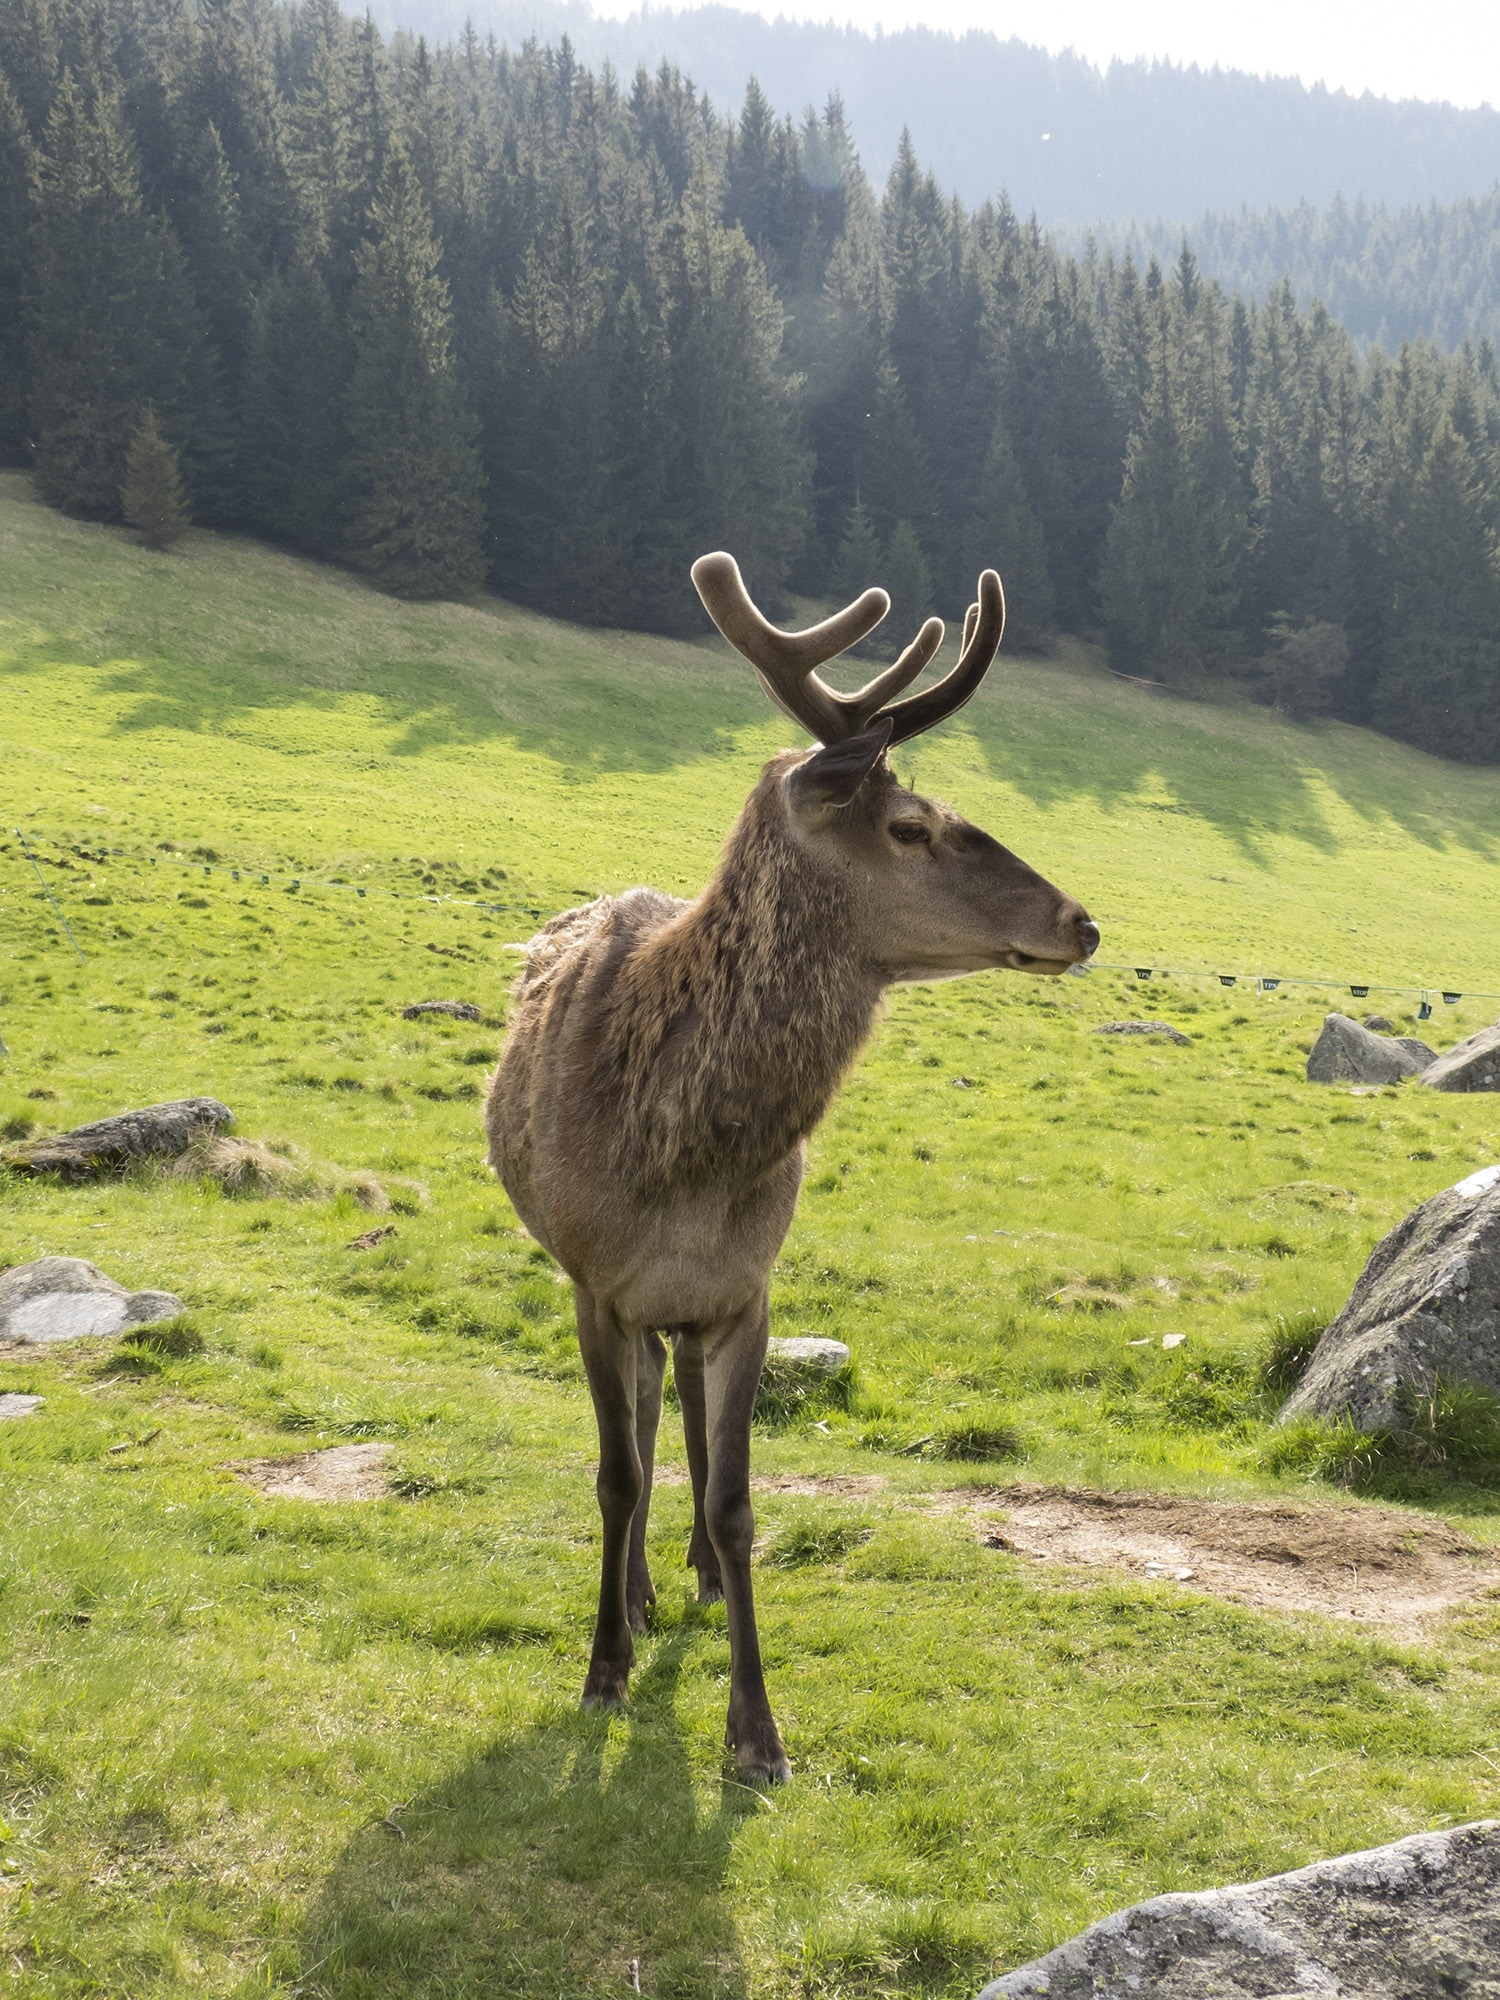 Moose, Animal, Mountains, Forest, View, one animal, animal wildlife